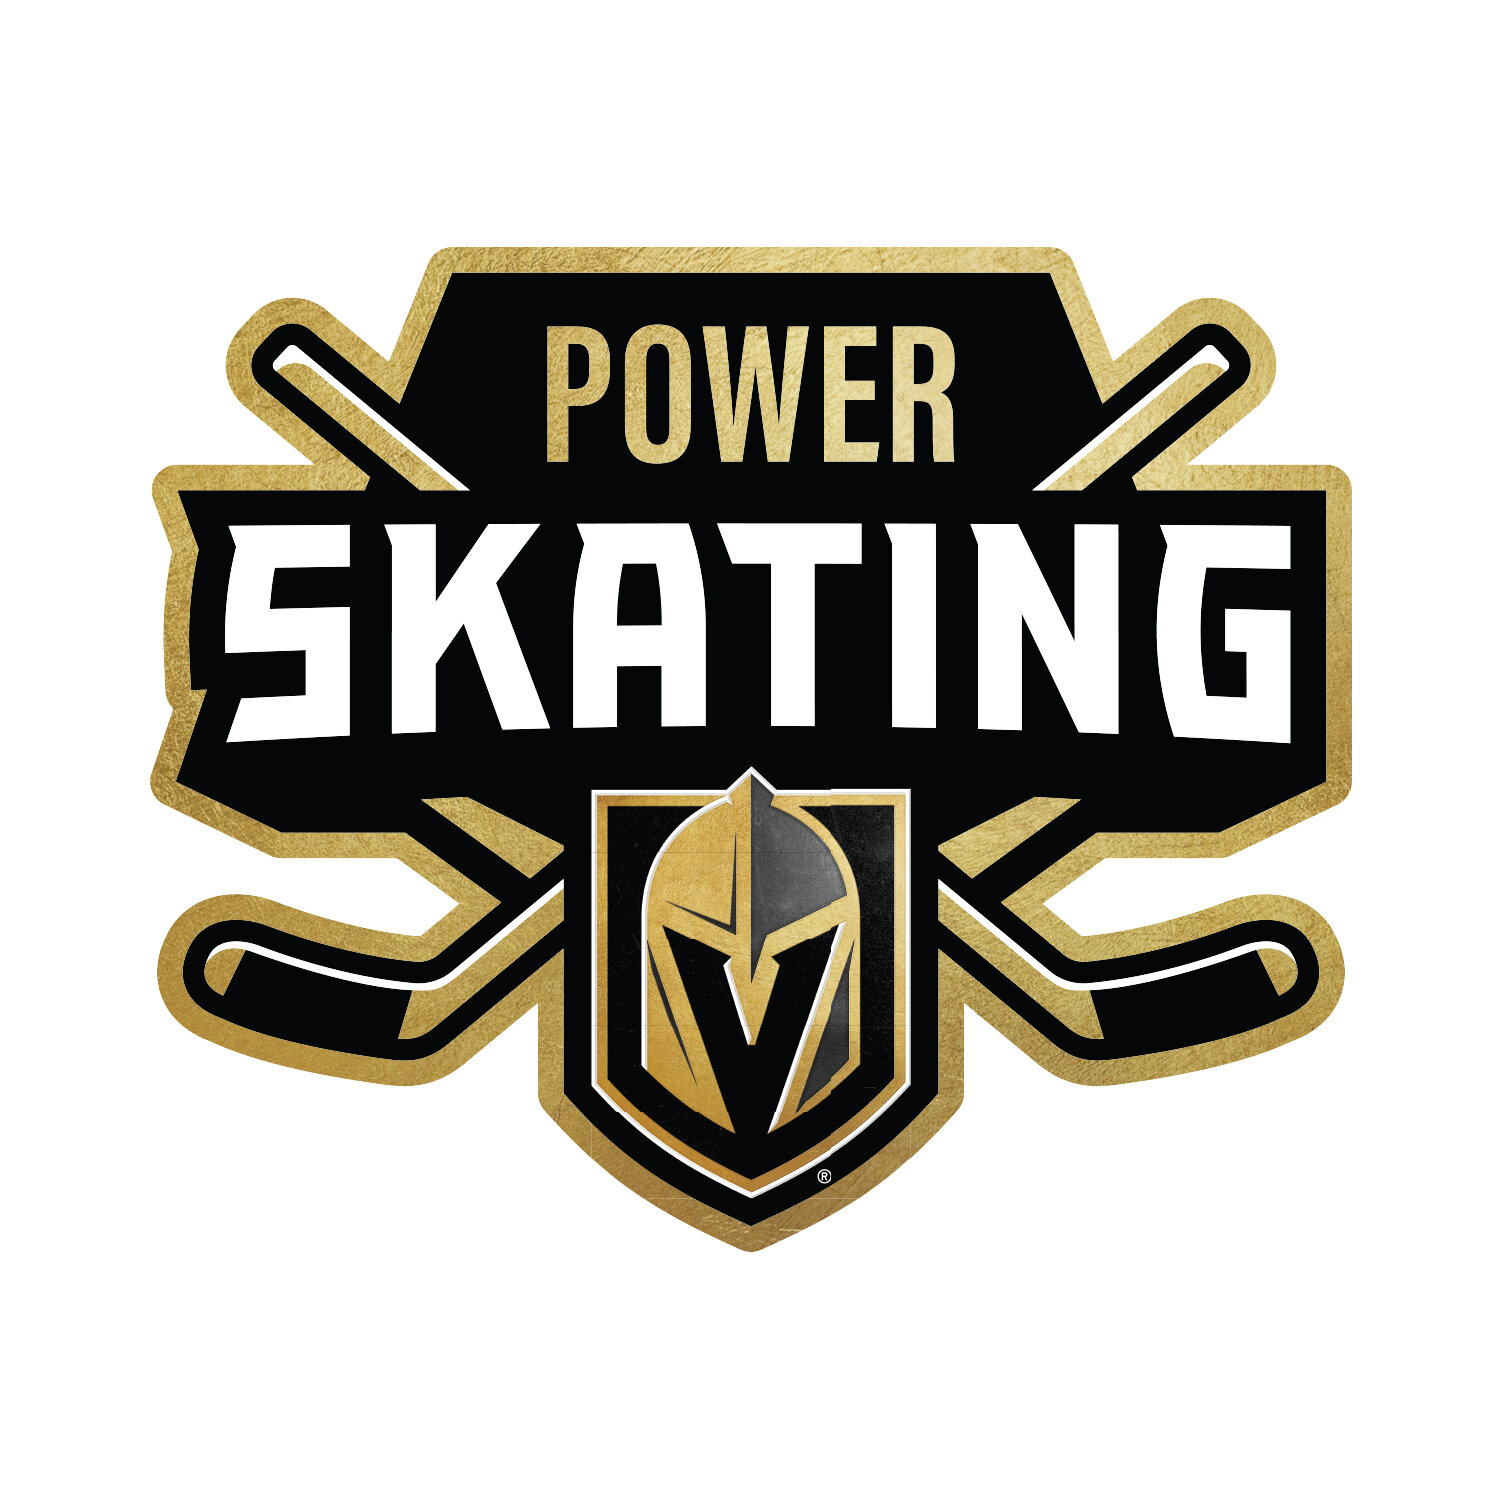 Power Skating.jpg